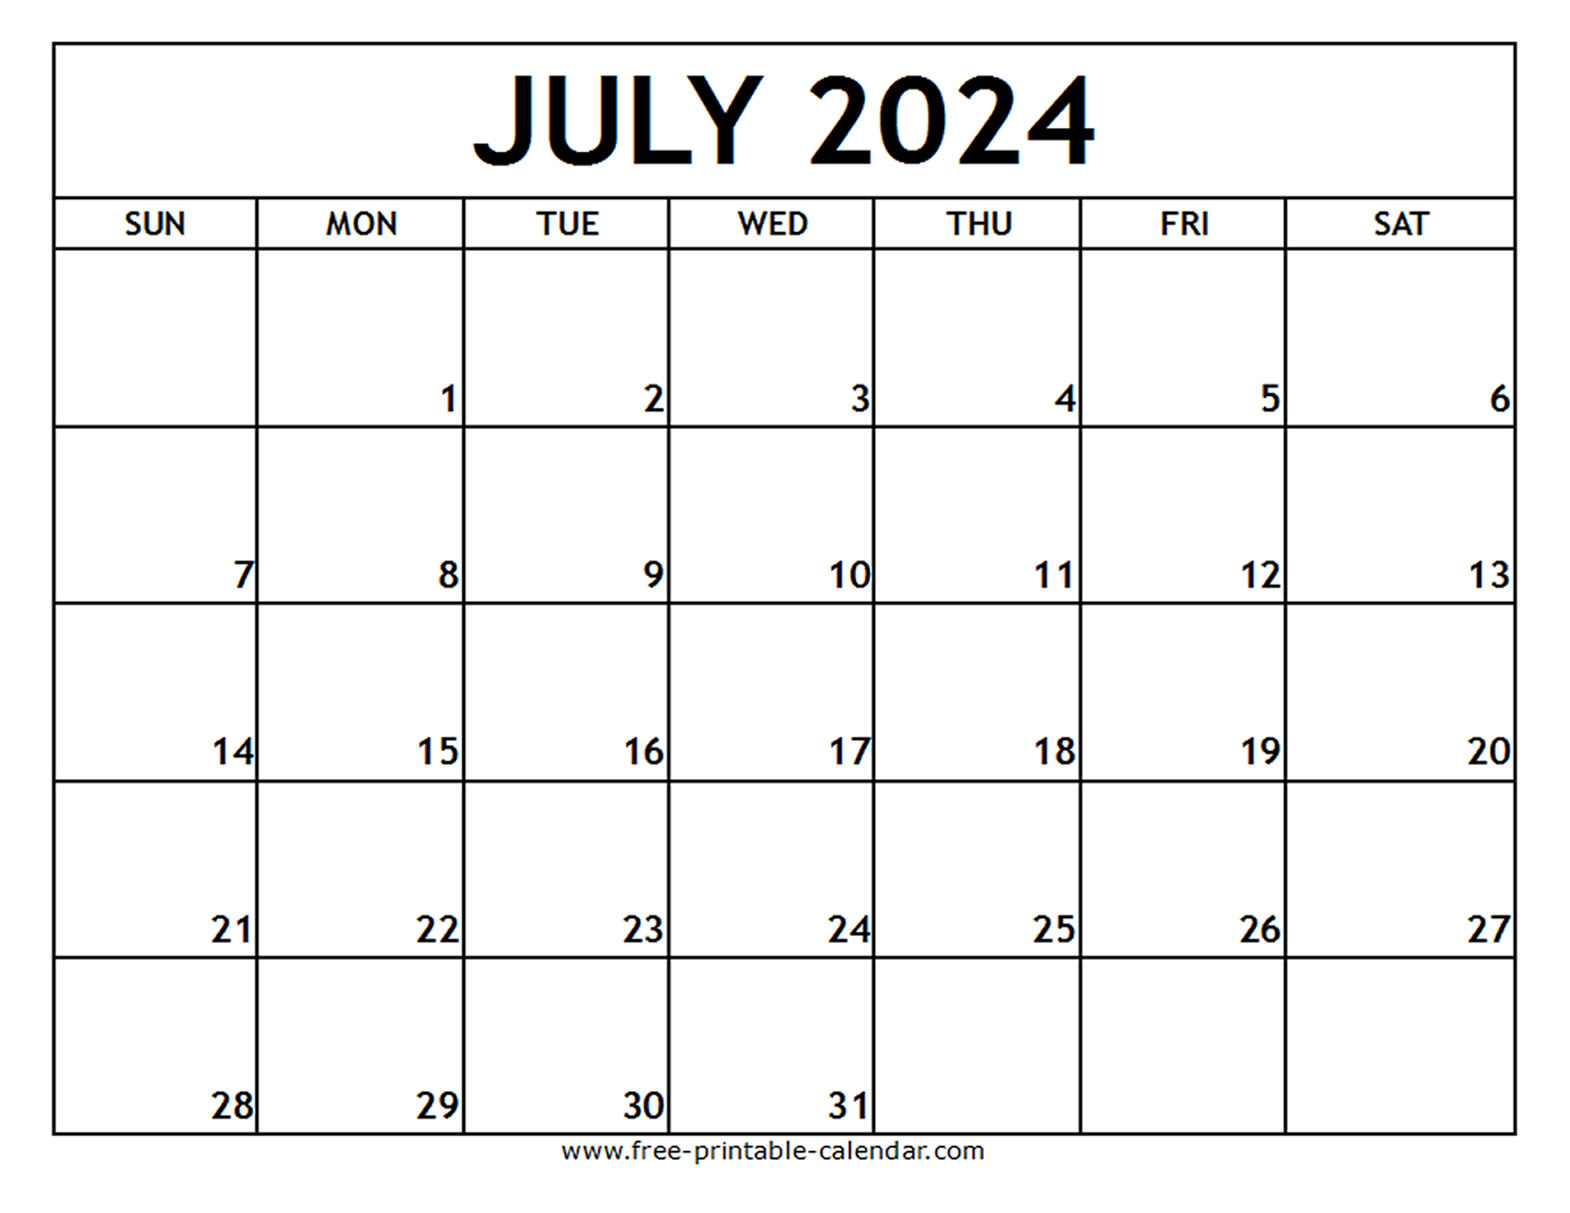 July 2024 Printable Calendar - Free-Printable-Calendar in Calendar July 2024 Printable Free